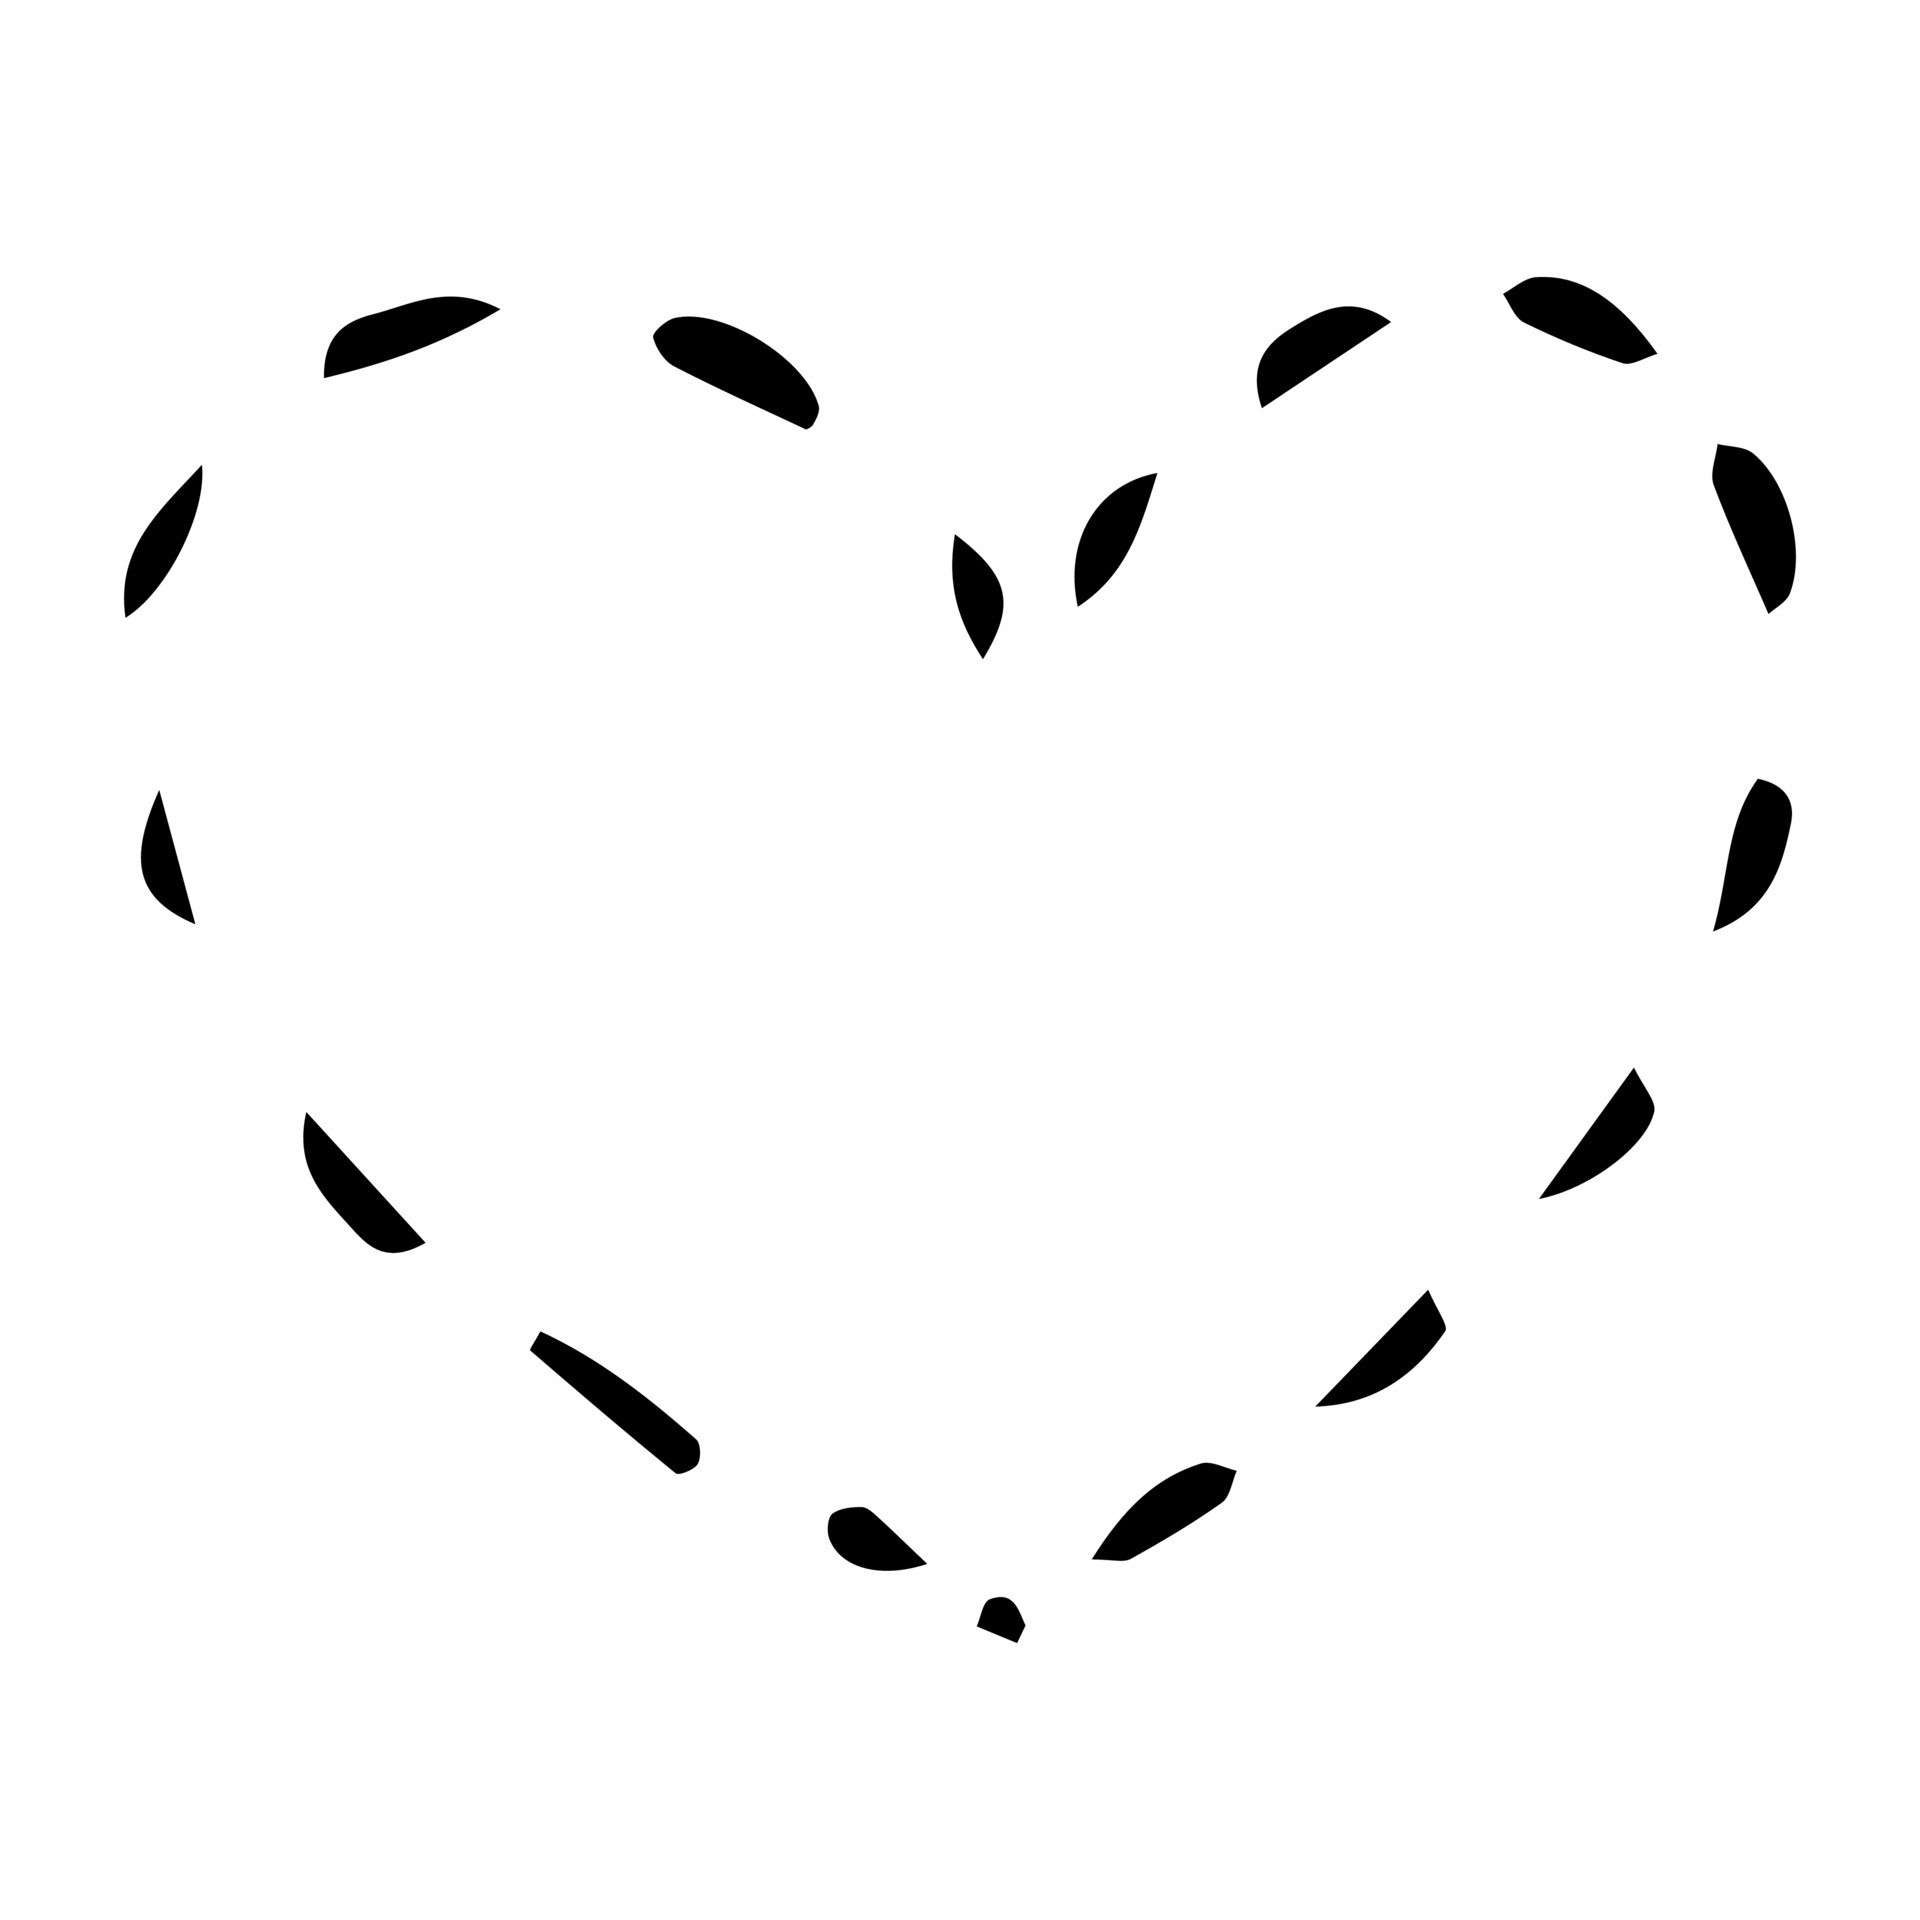 Pink sketch heart symbol Royalty Free Vector Image